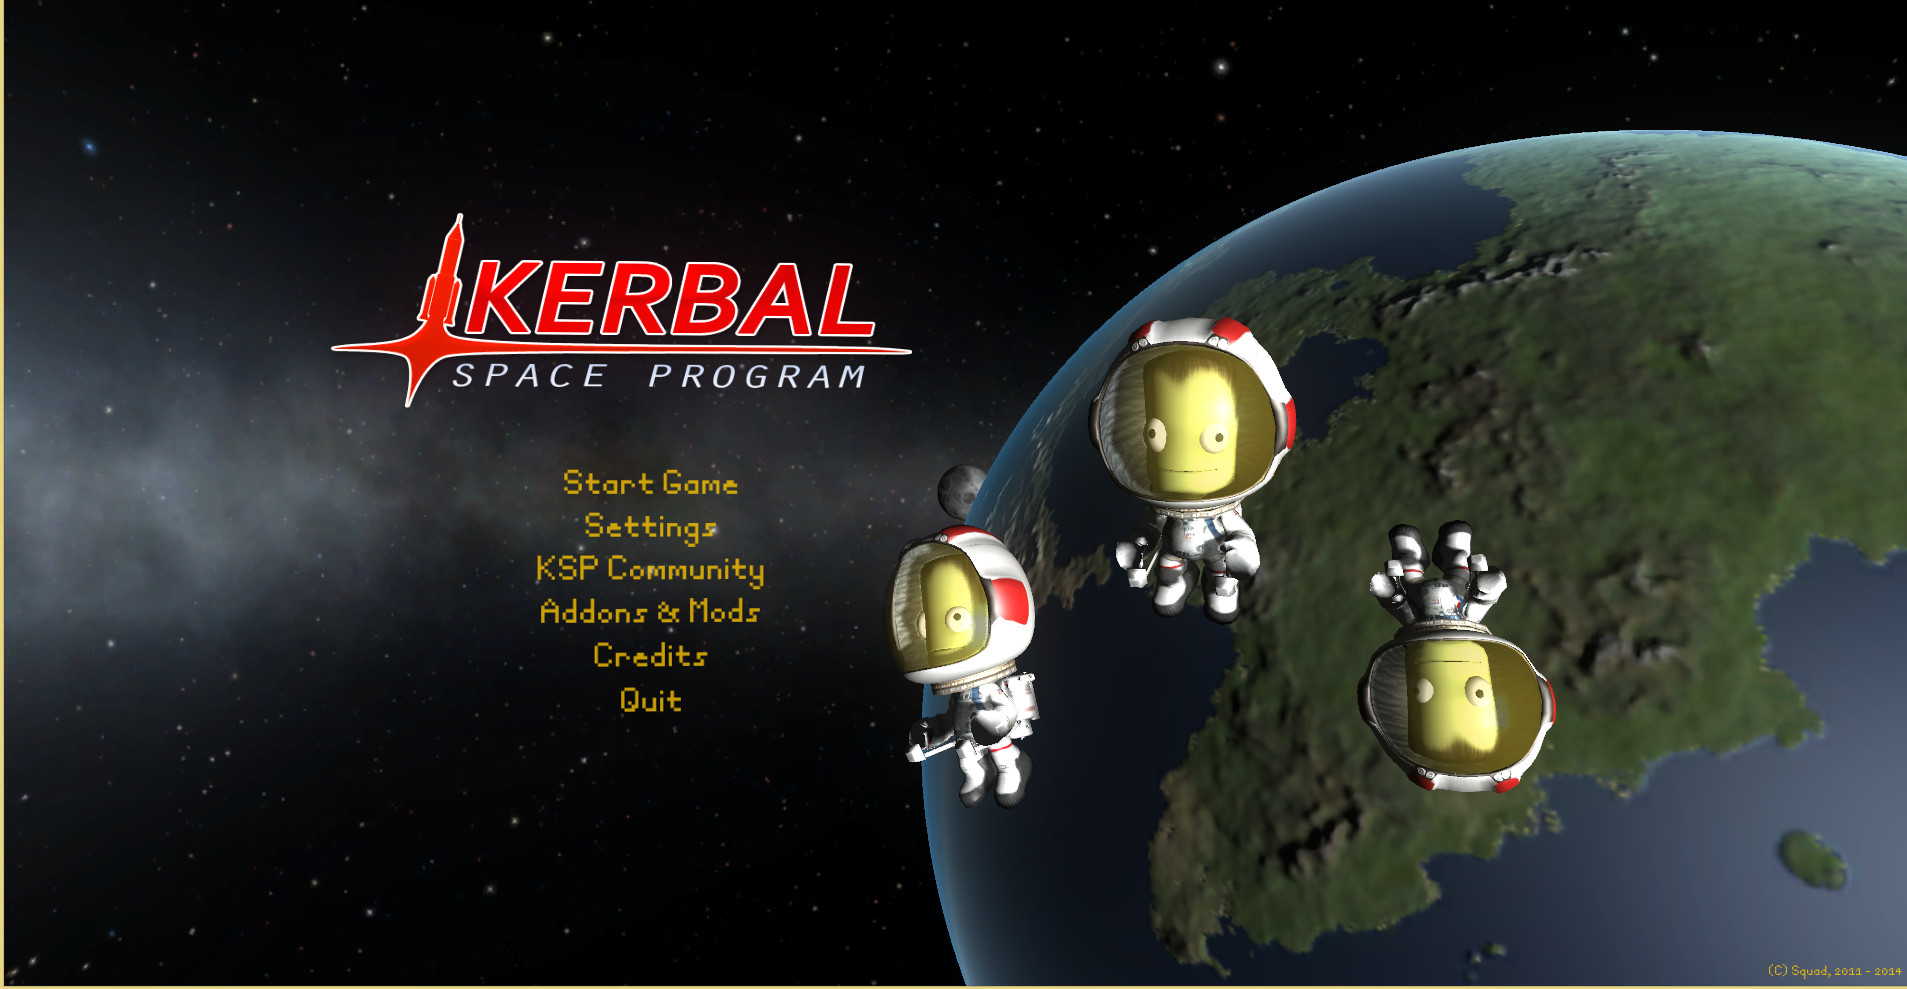 kerbal space program 2 early access